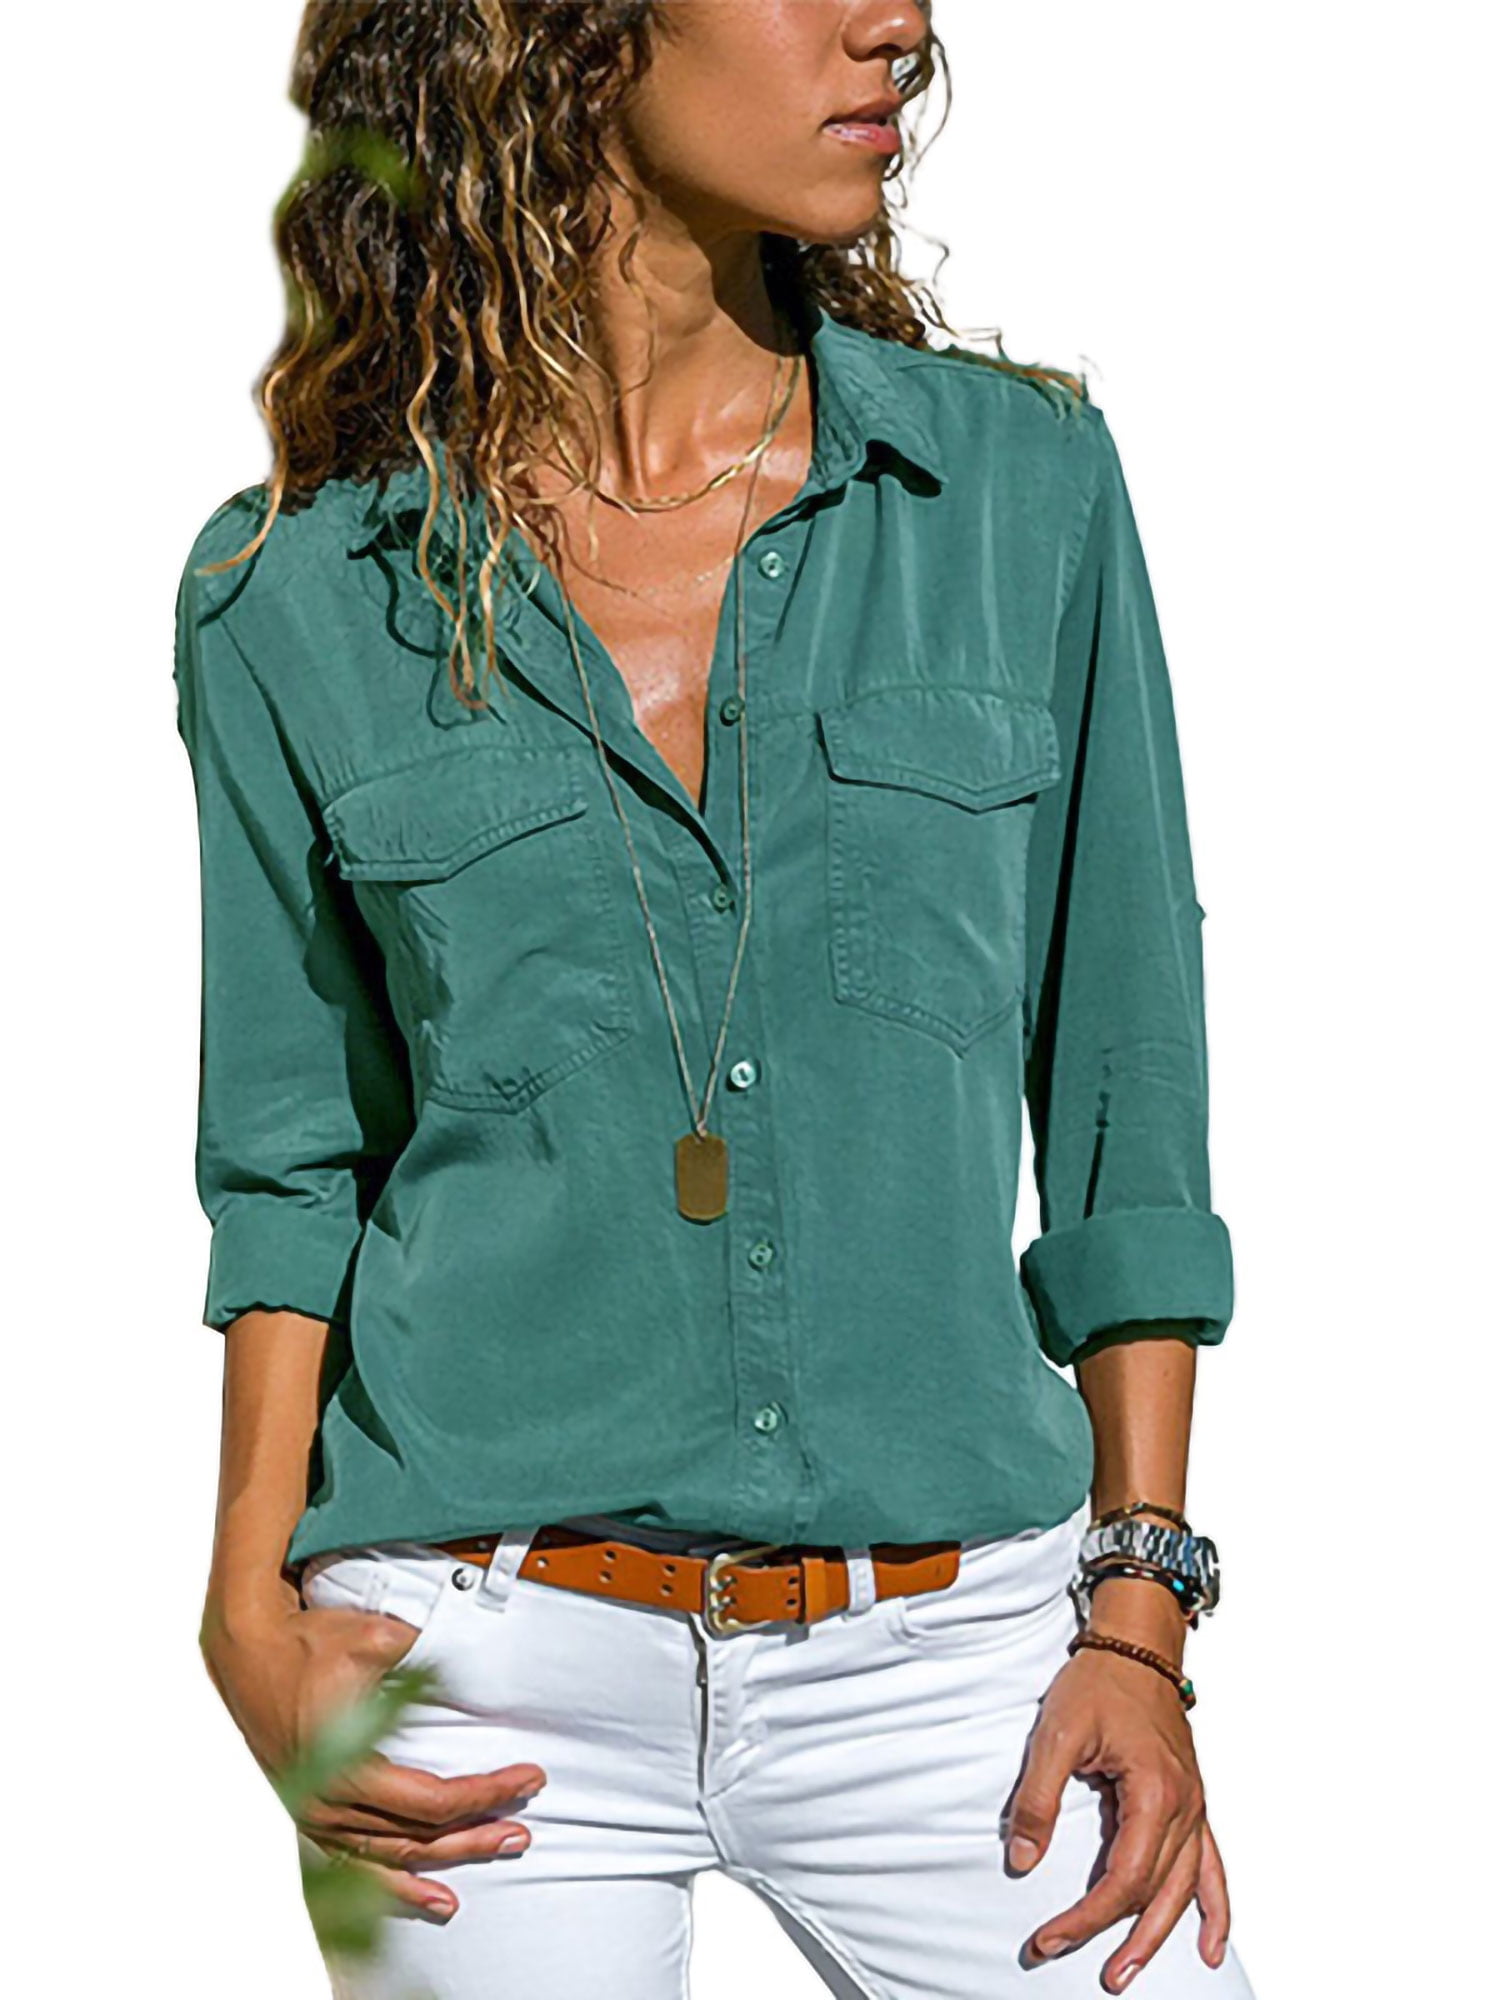 Voguele Women Blouse Button Down Tops Pockets Shirts Beach Tunic Shirt  Casual Tee Malachite Green US M 